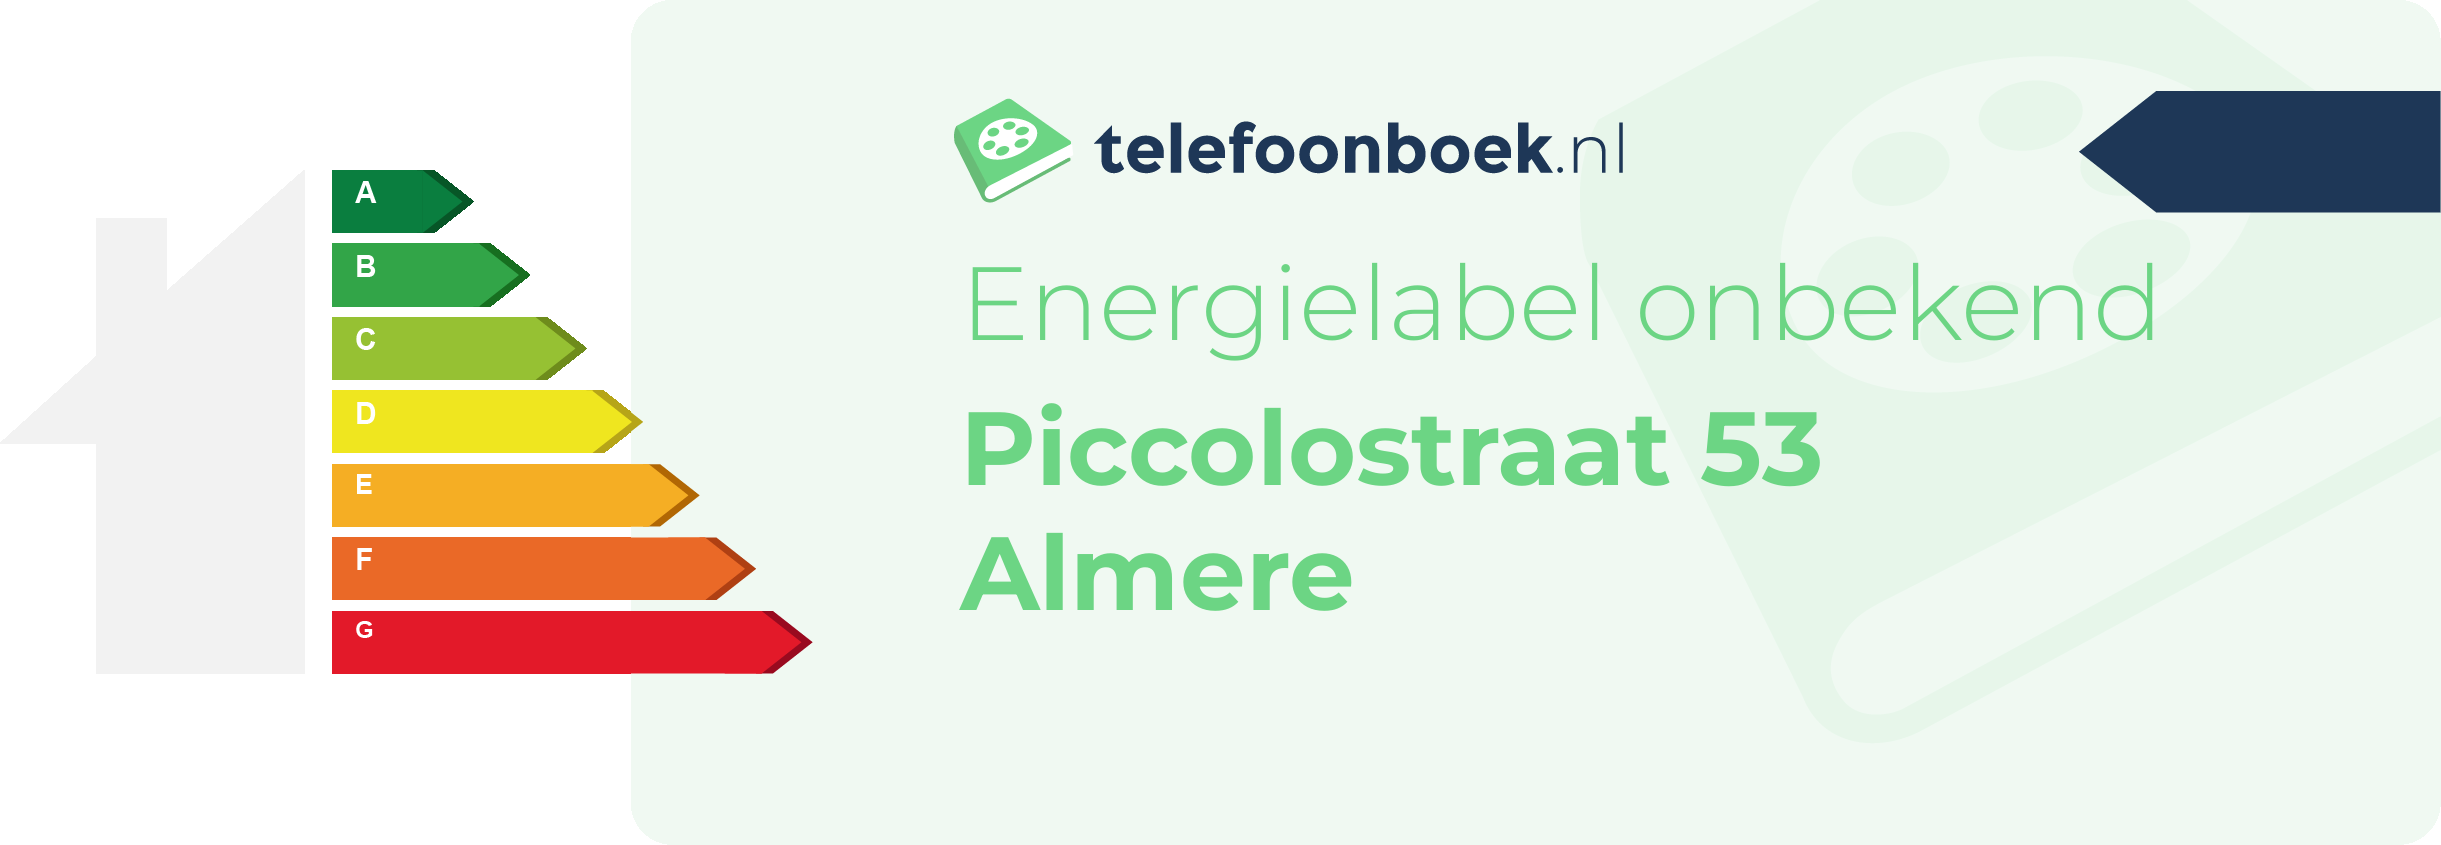 Energielabel Piccolostraat 53 Almere